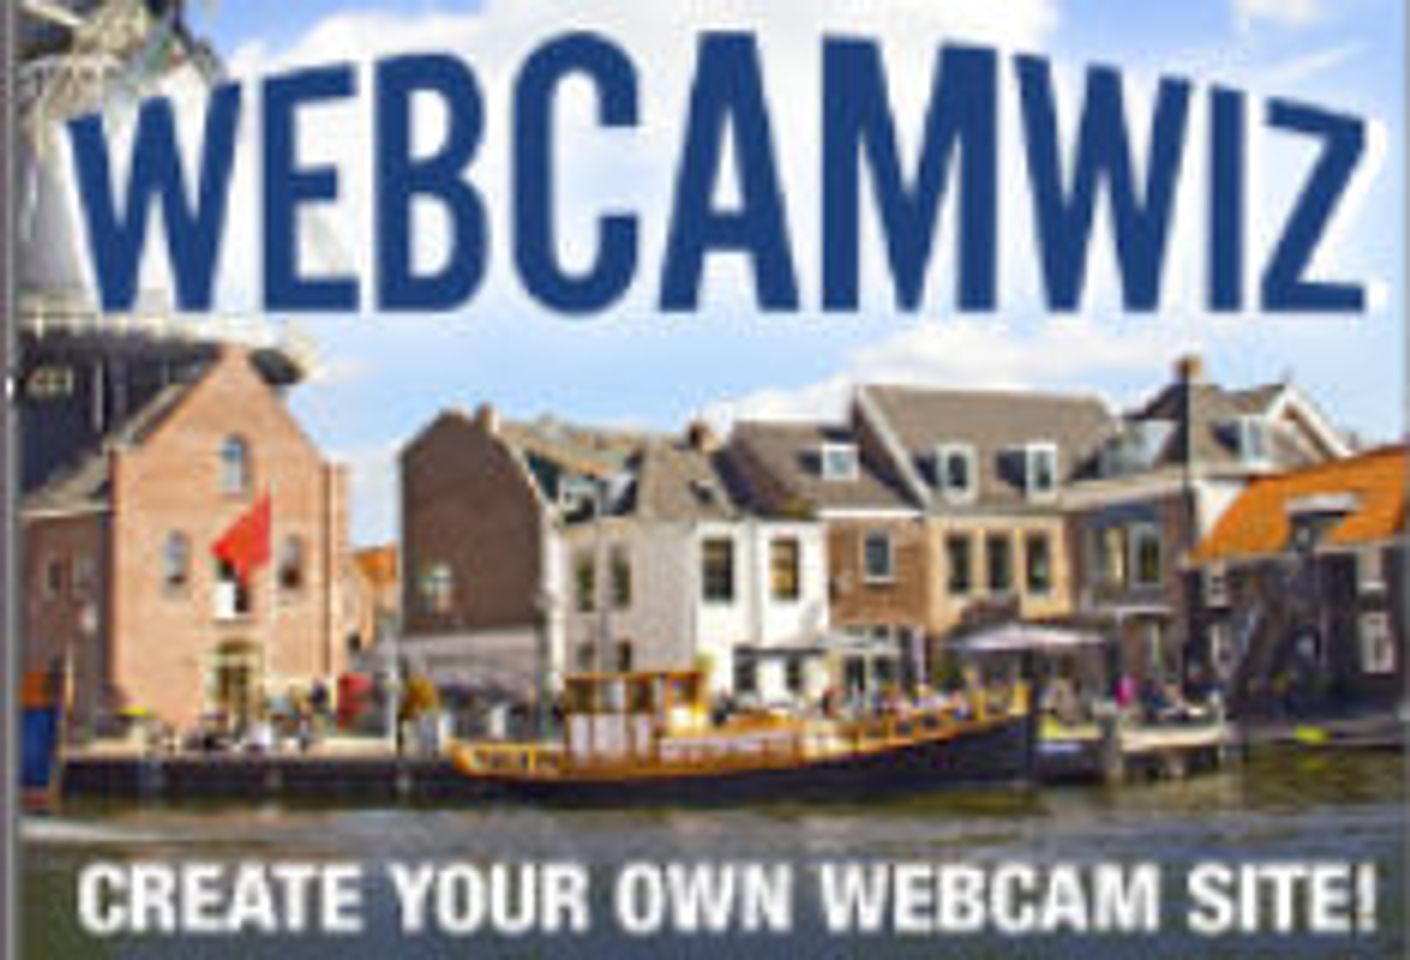 WebcamWiz Offers Complete Cross-Platform White Label Solution